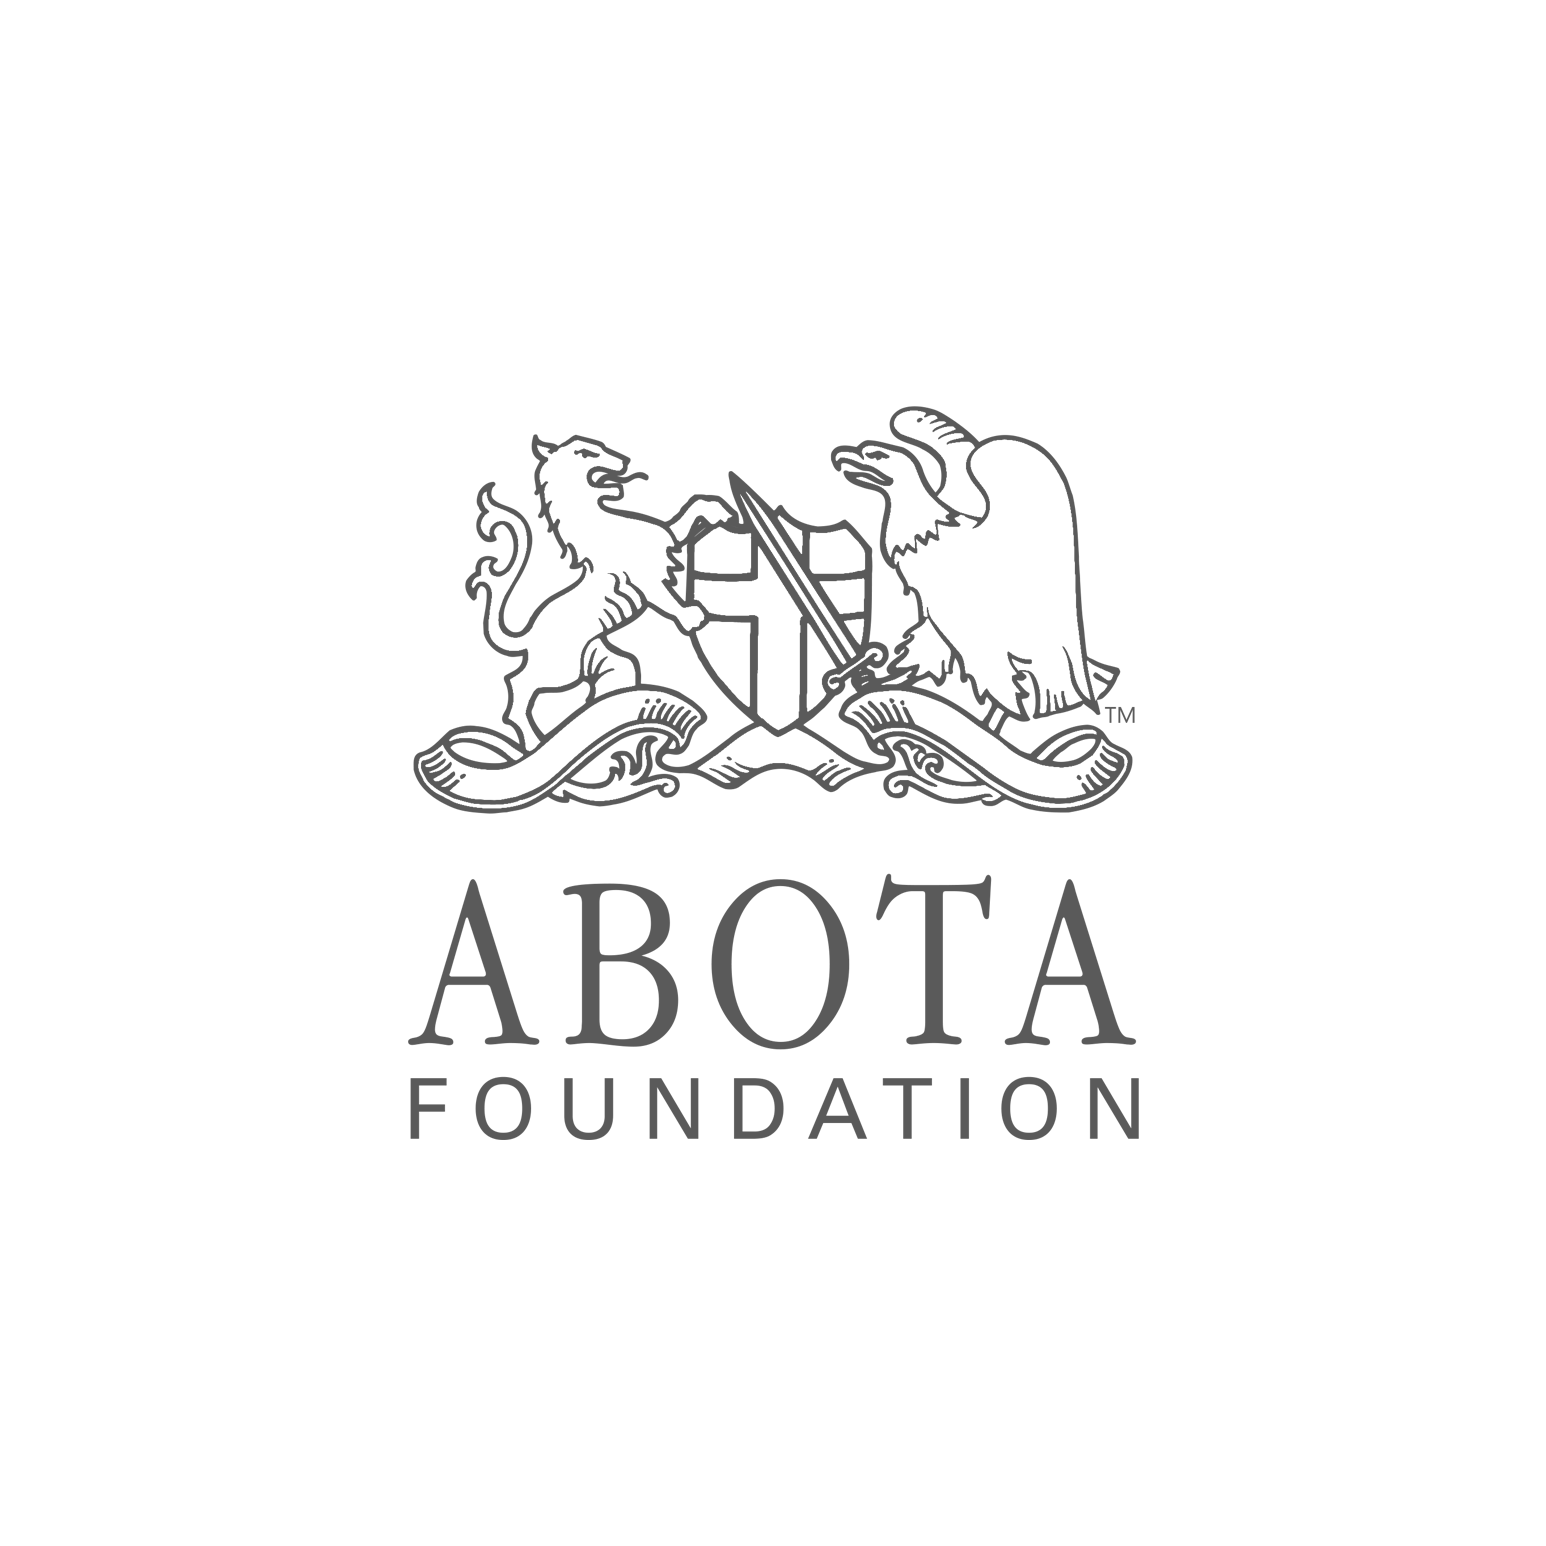 Abota Logo - ABOTA Foundation Archives - CIVICS RENEWAL NETWORK